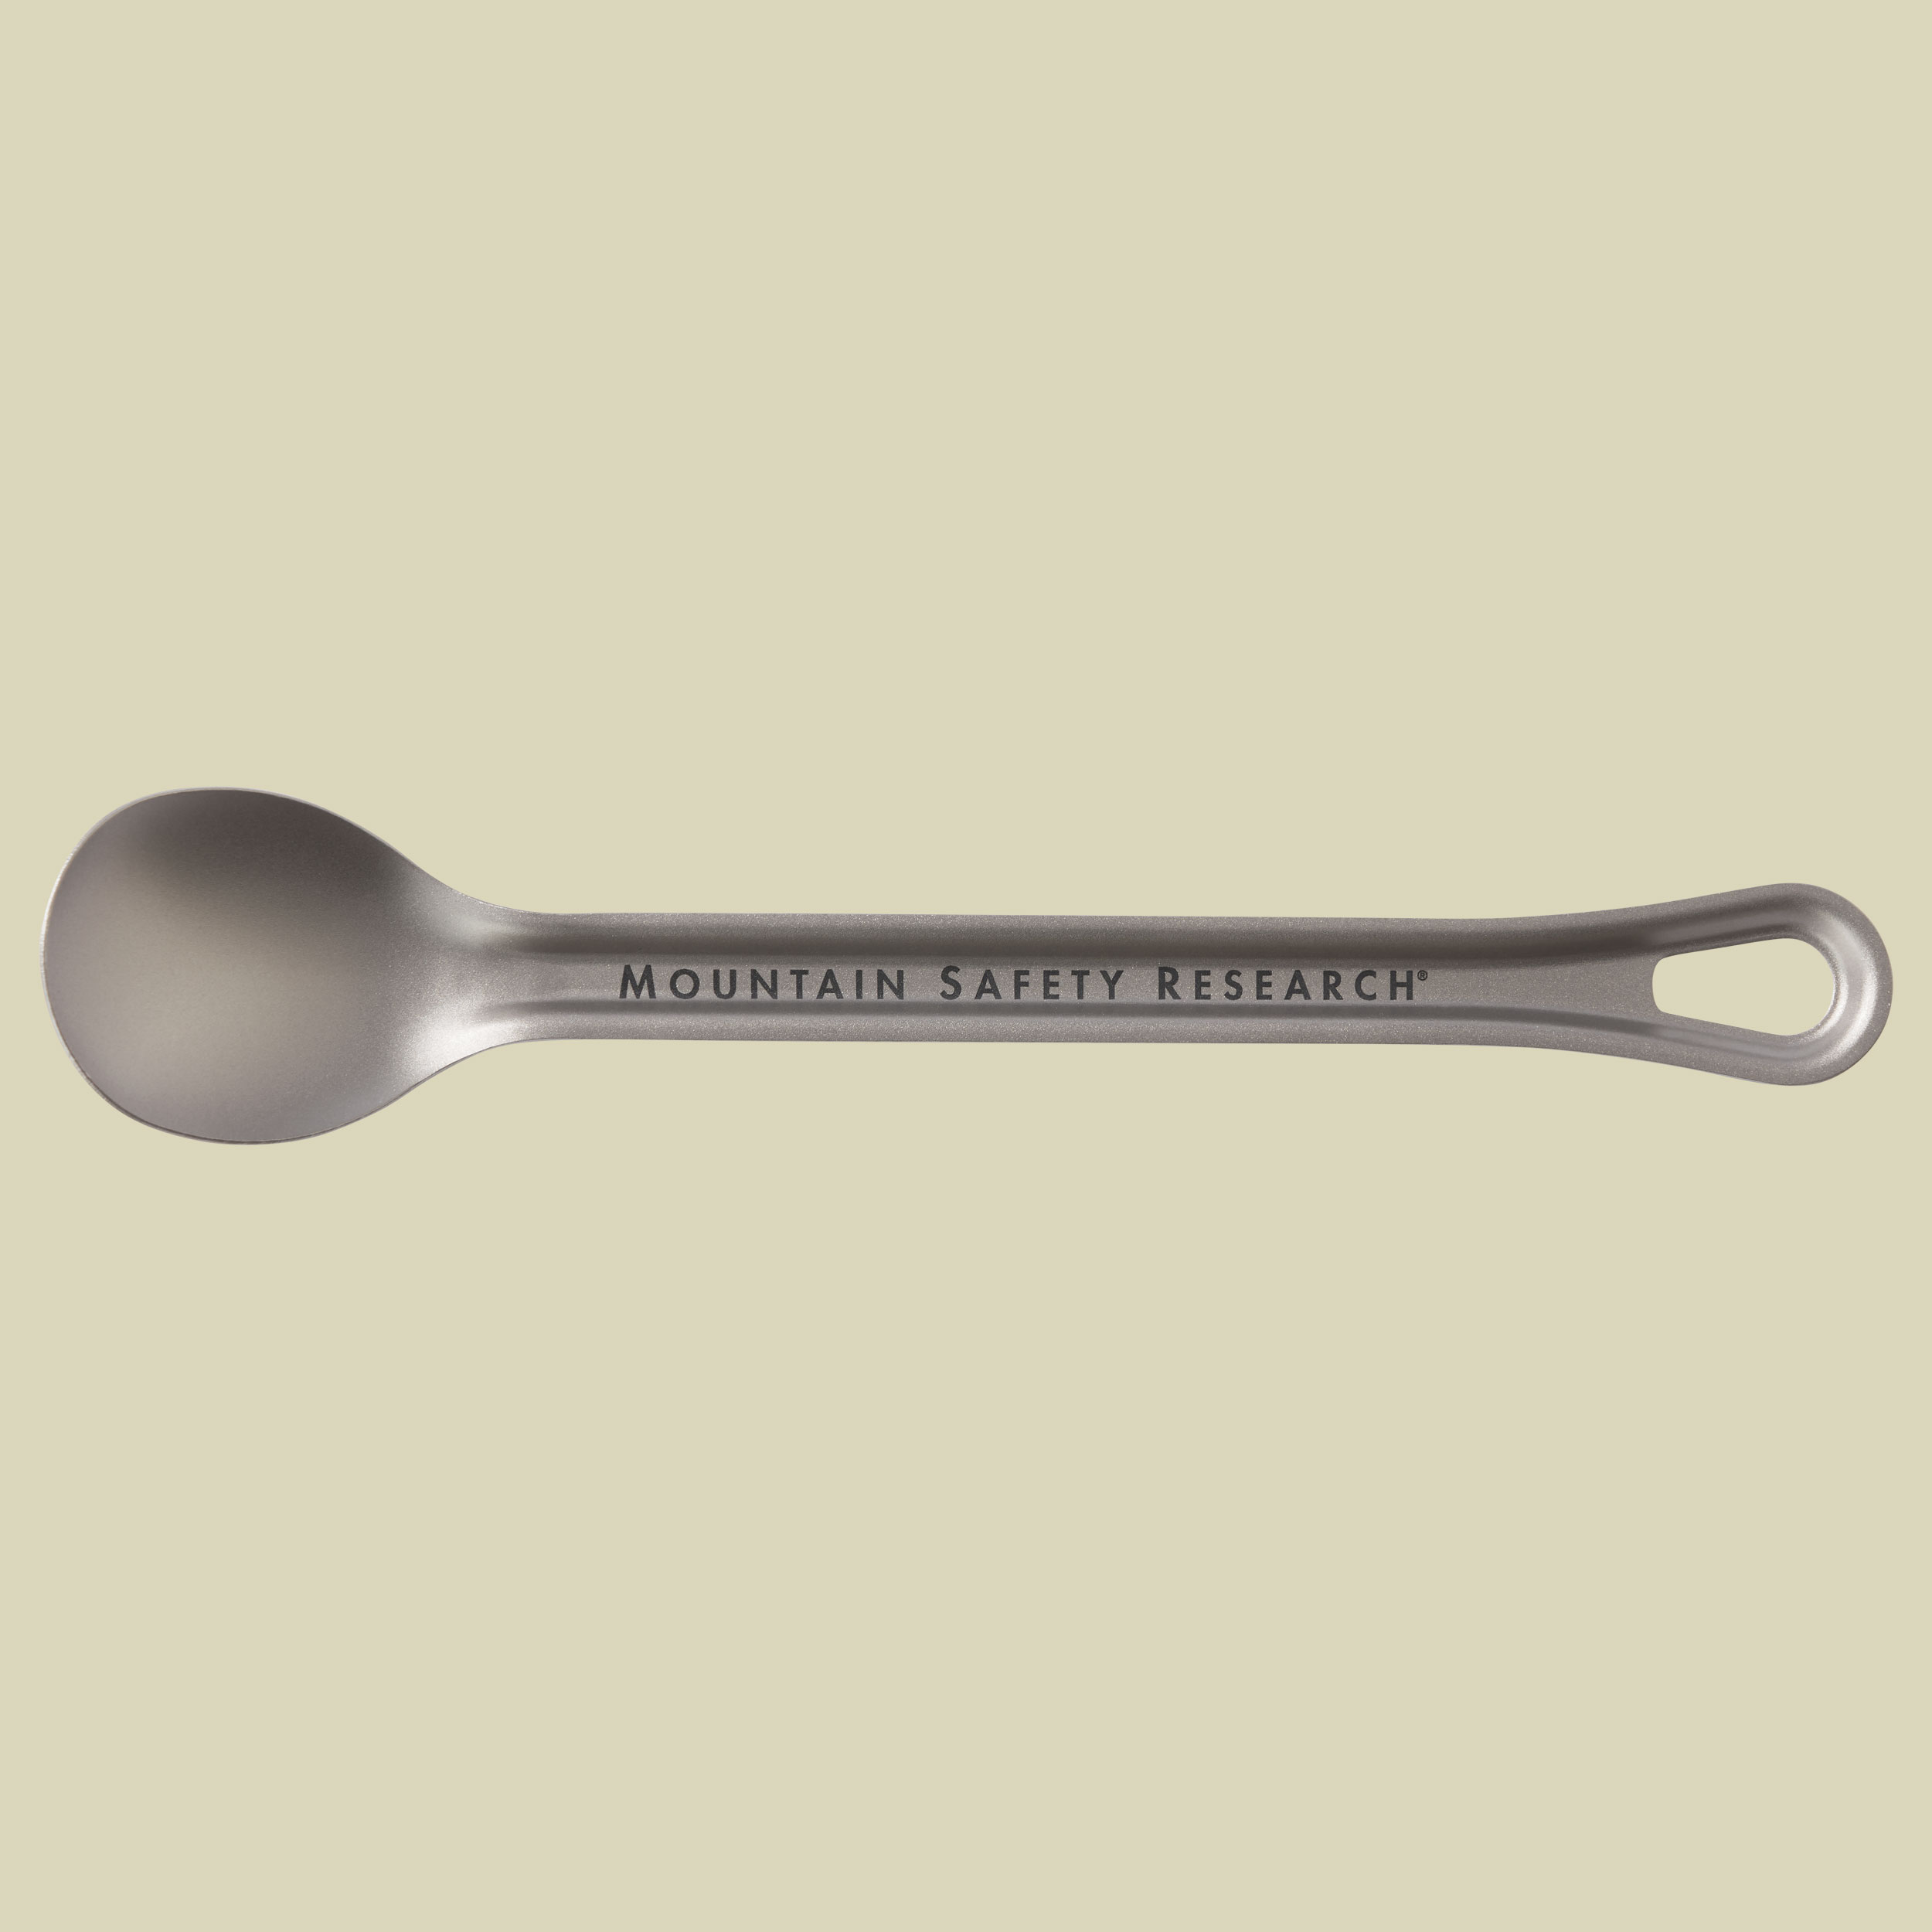 Titan Long Spoon